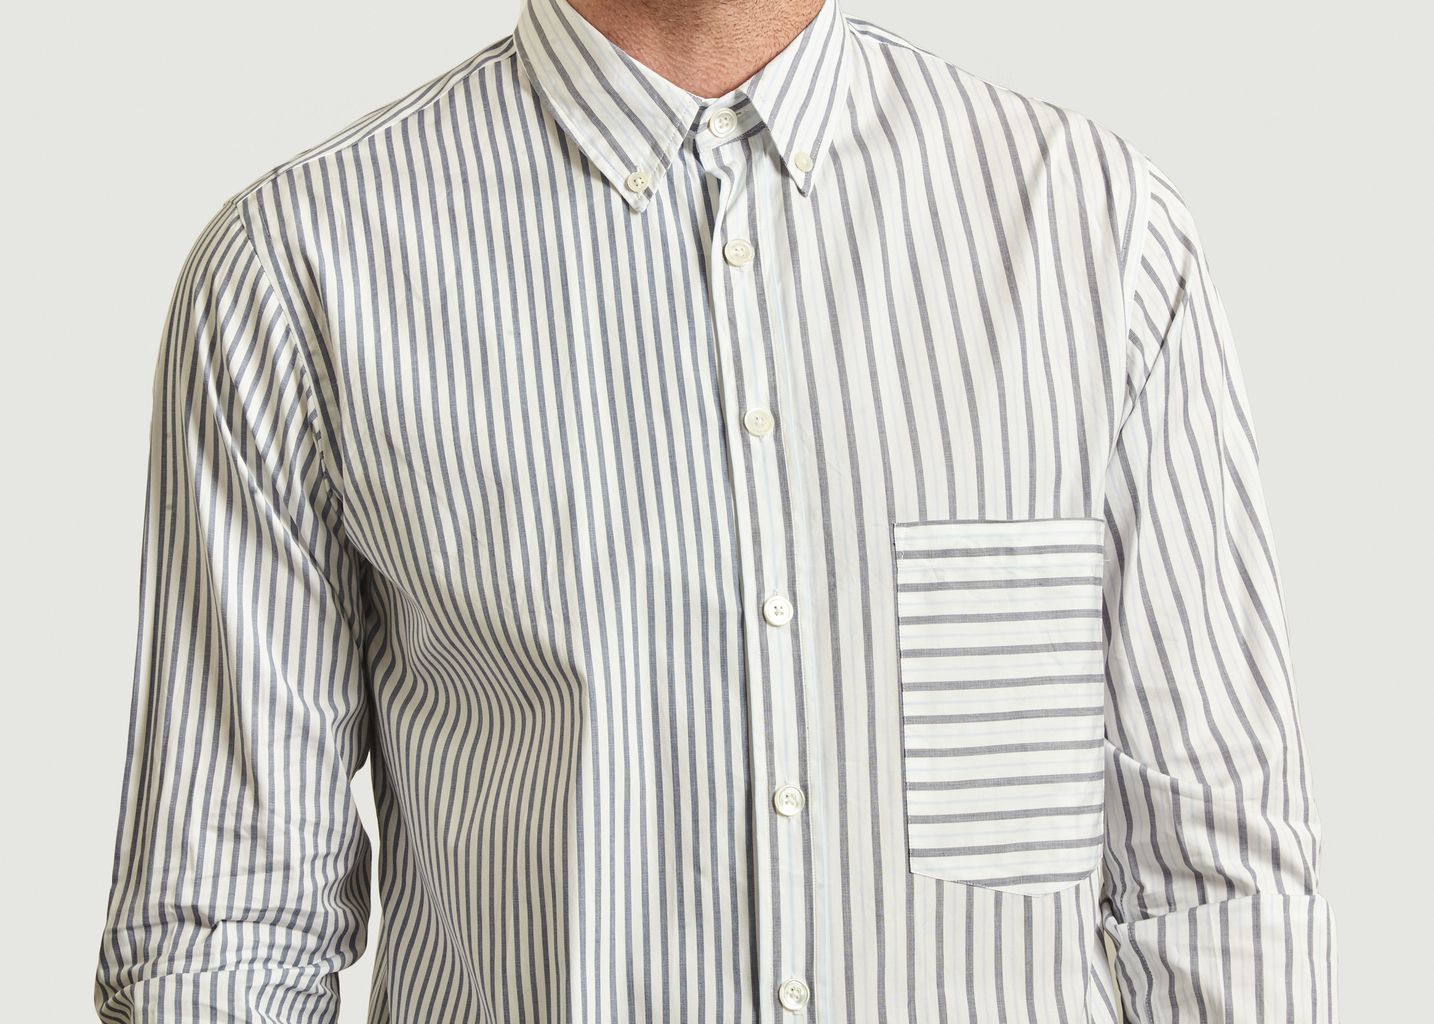 Cruce striped shirt - Loreak Mendian